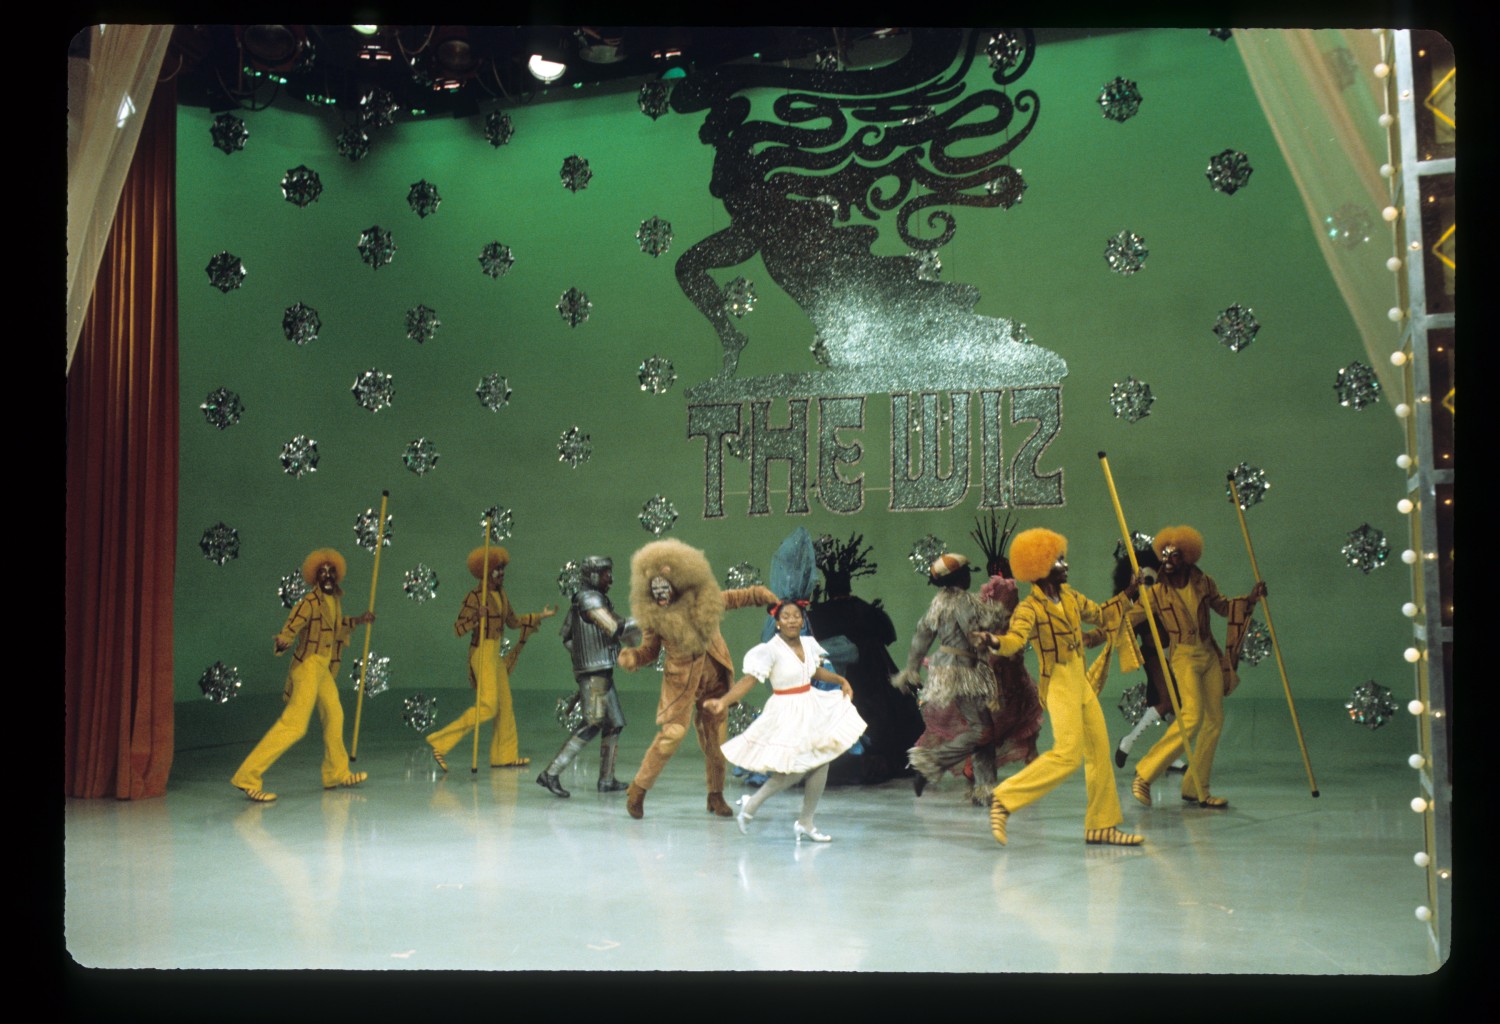 The Wizard of Oz - Saturday Night Live 